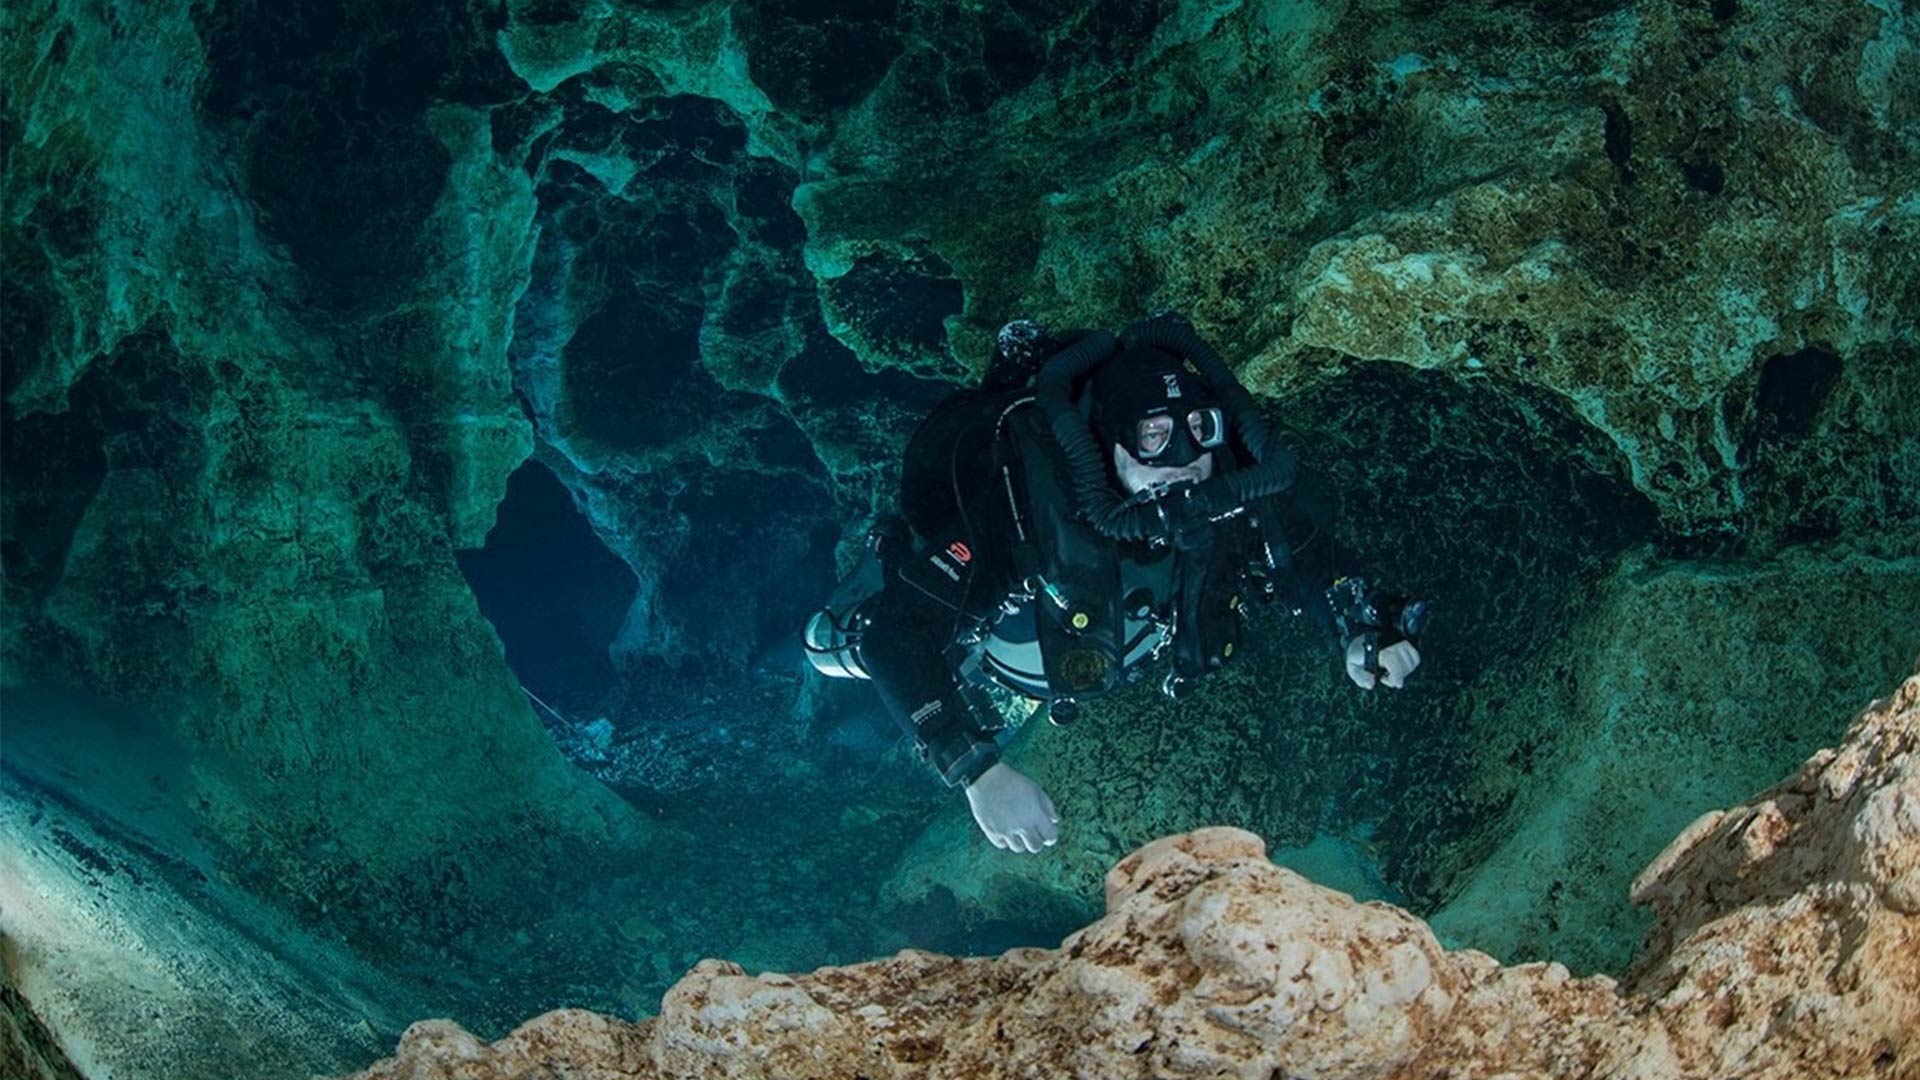 Richard Walker exploring an underwater cave system.